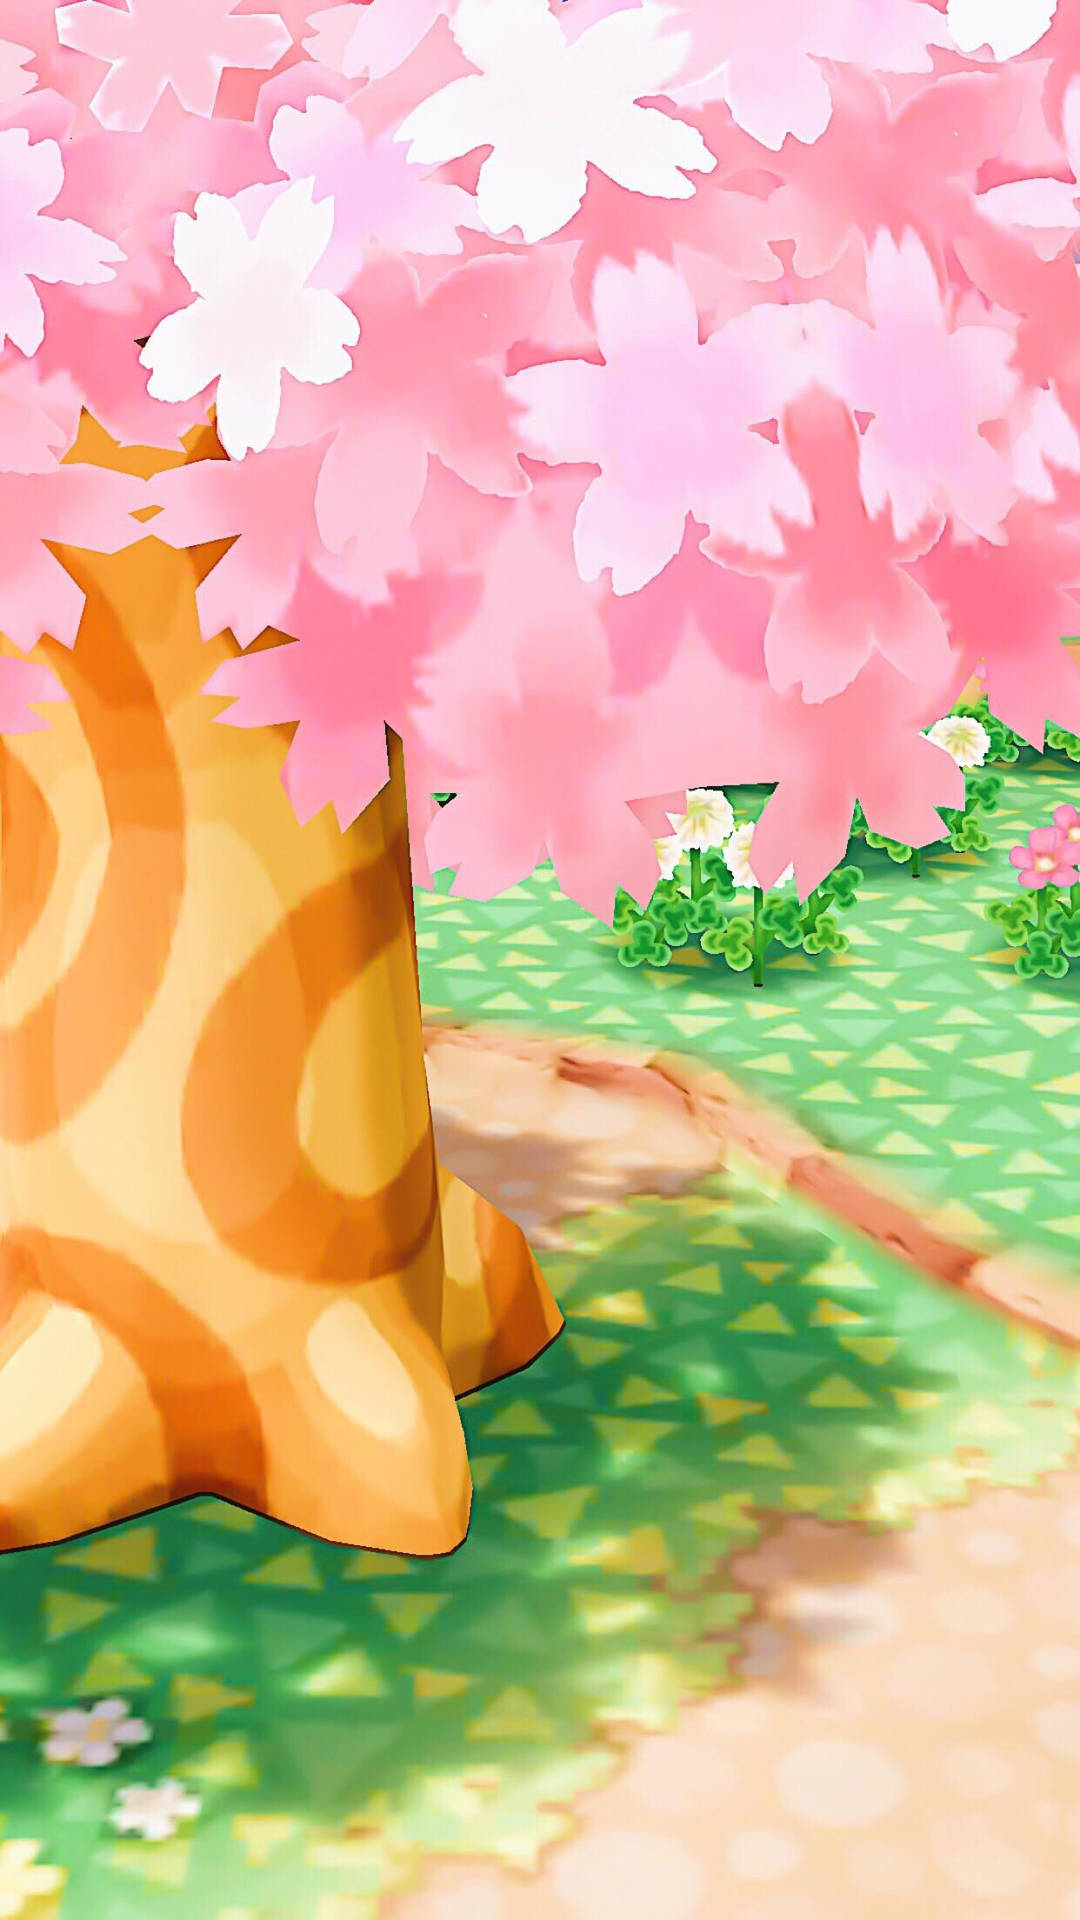 Hd Animal Crossing Pink Tree Wallpaper